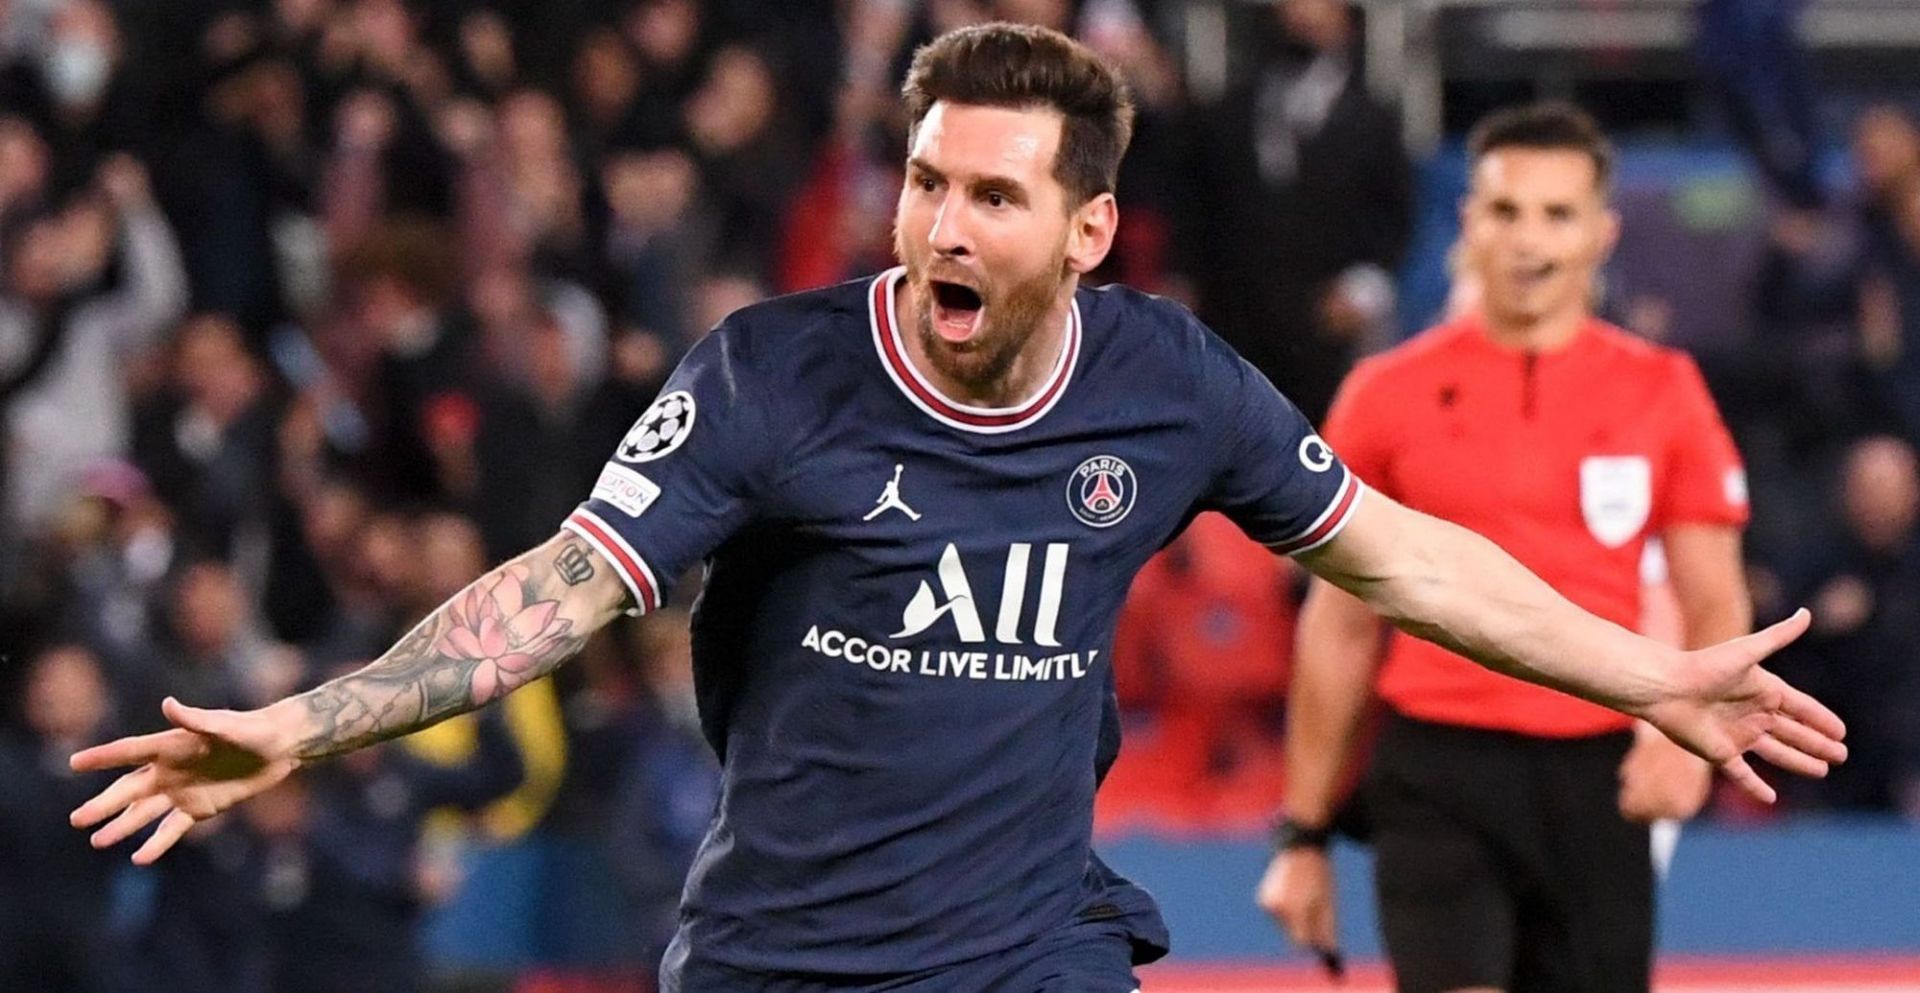 Lionel Messi celebrating scoring a goal for Paris Saint-Germain.